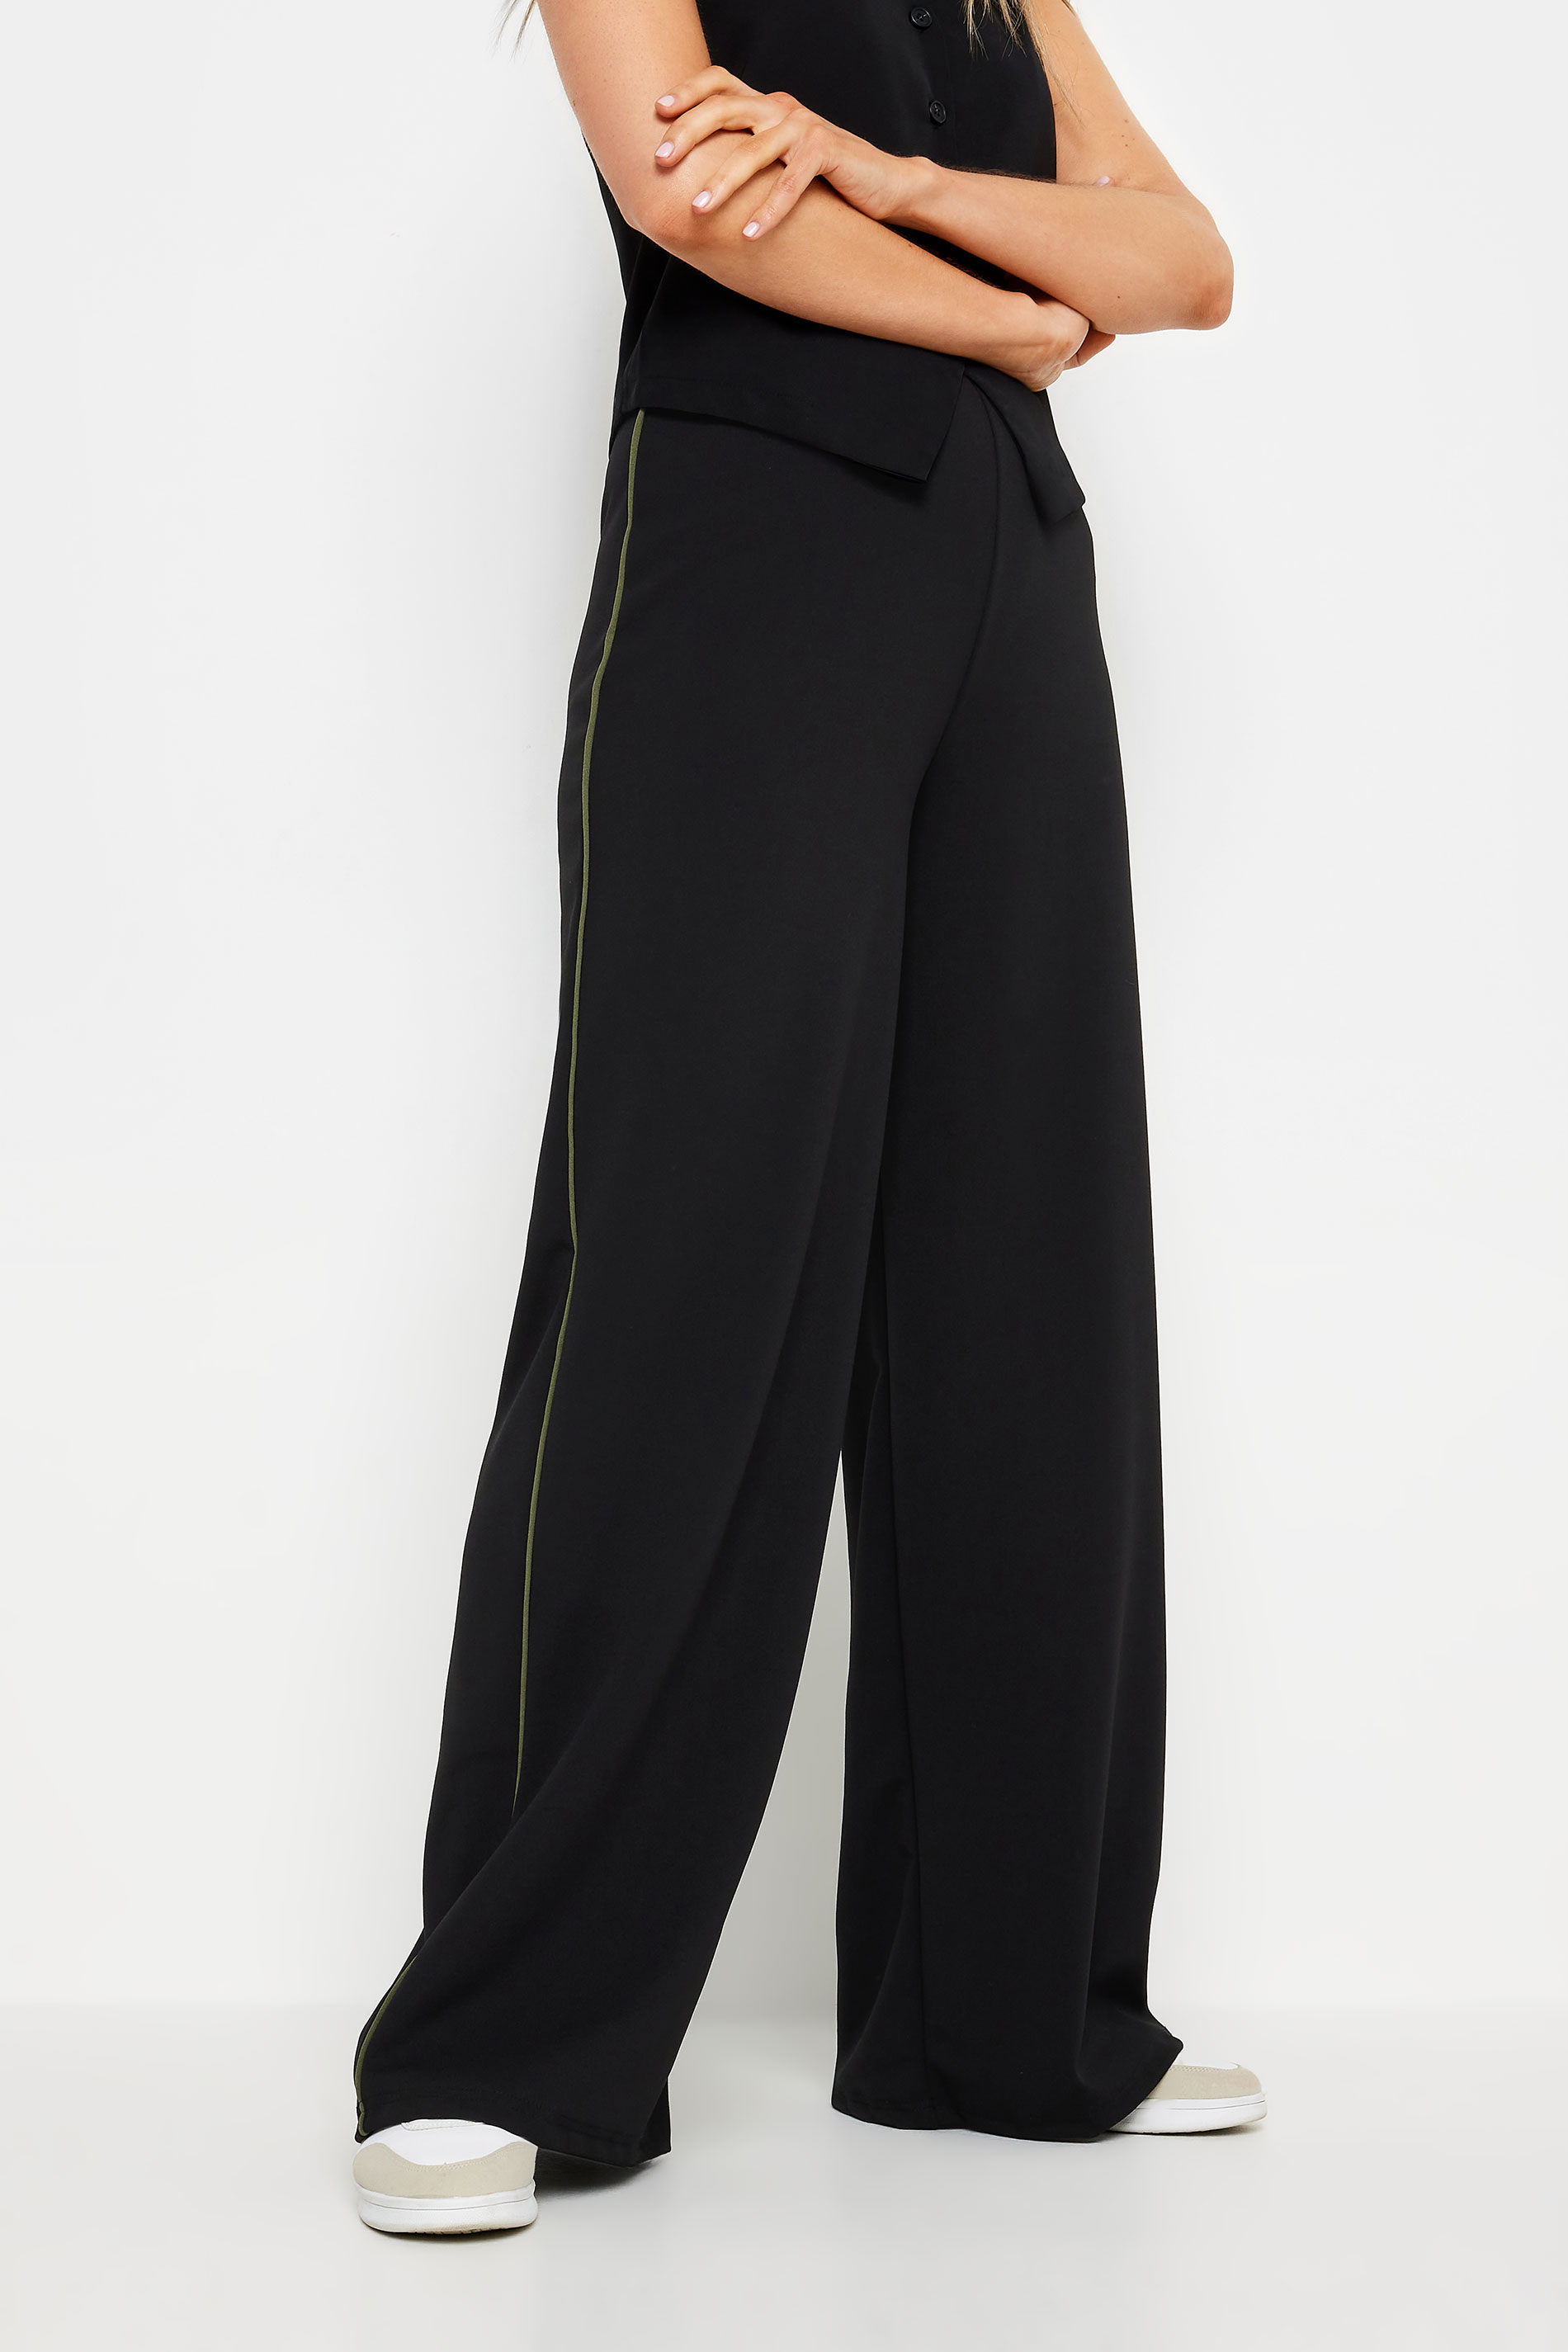 LTS Tall Womens Black & Khaki Green Side Pipe Detail Wide Leg Trousers | Long Tall Sally 2